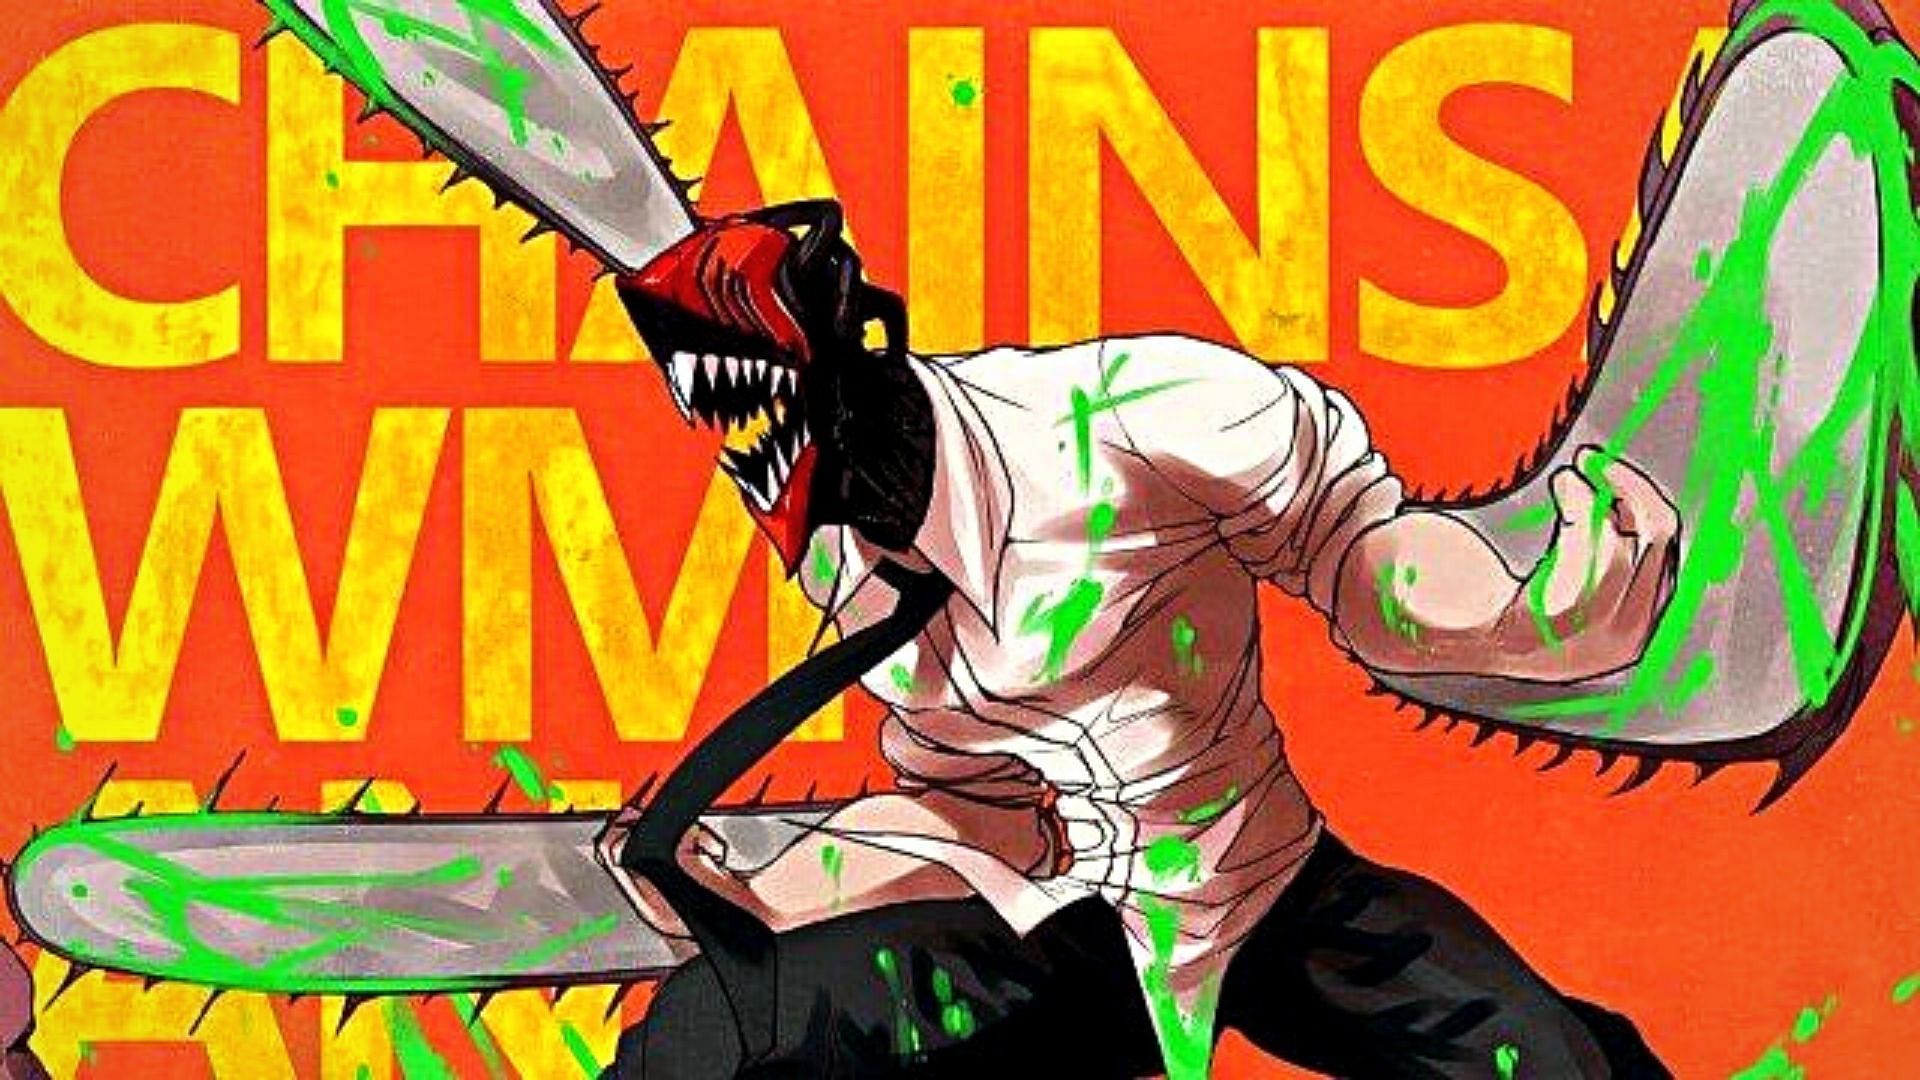 Chainsaw Man - Episode 2 is now airing in Japan! 👑 #チェンソーマン #chainsawman  #FujimotoTatsuki